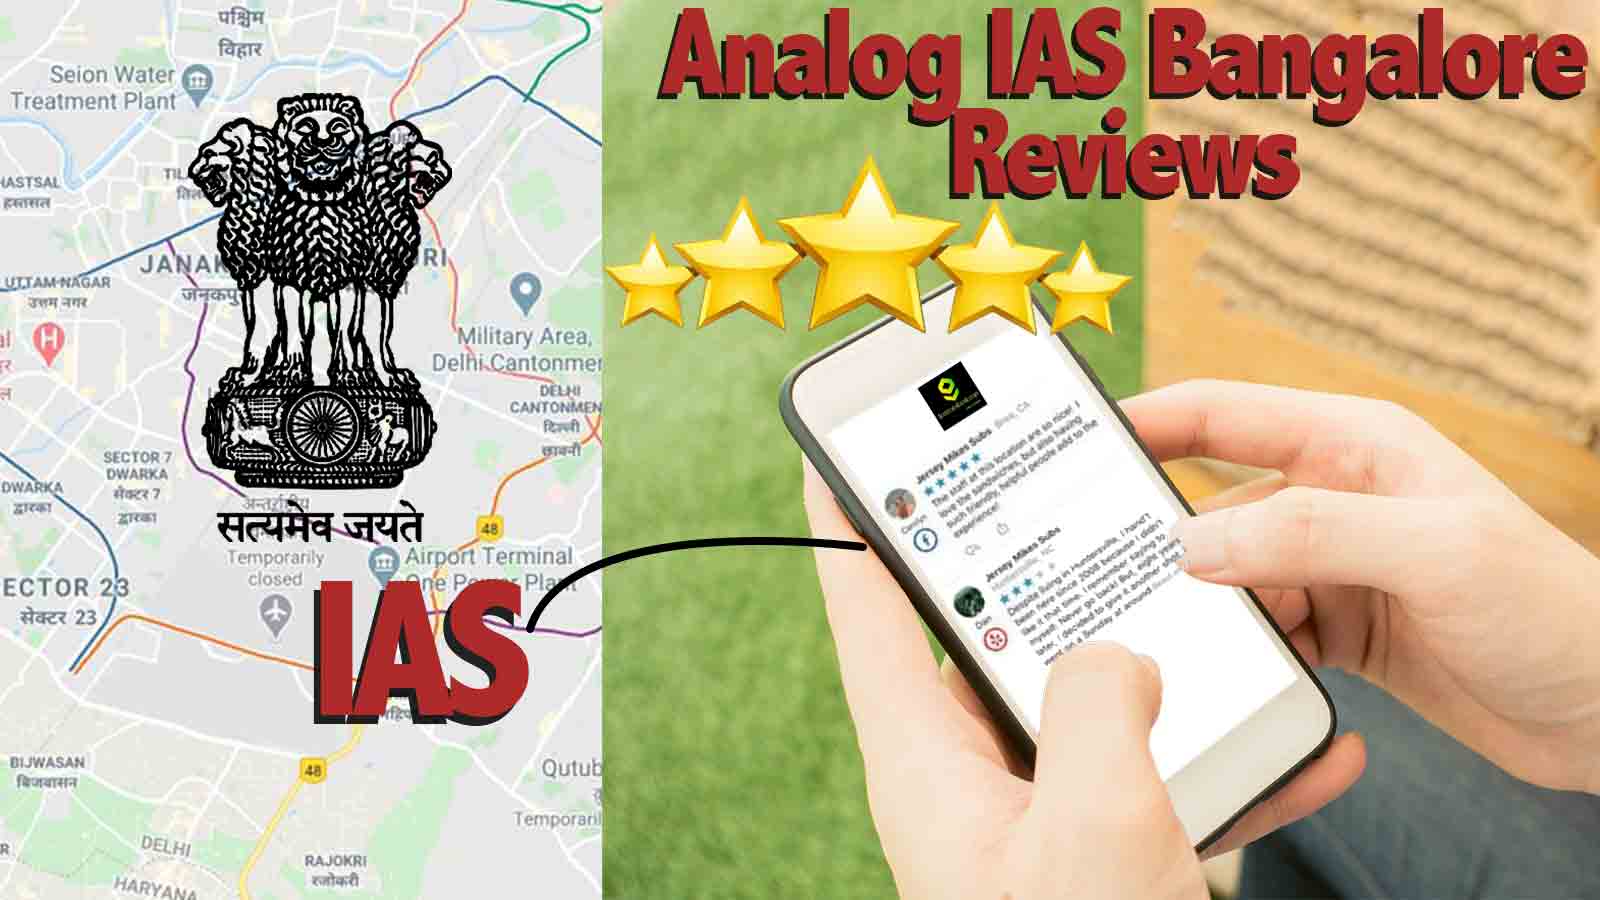 Analog IAS Bangalore Review